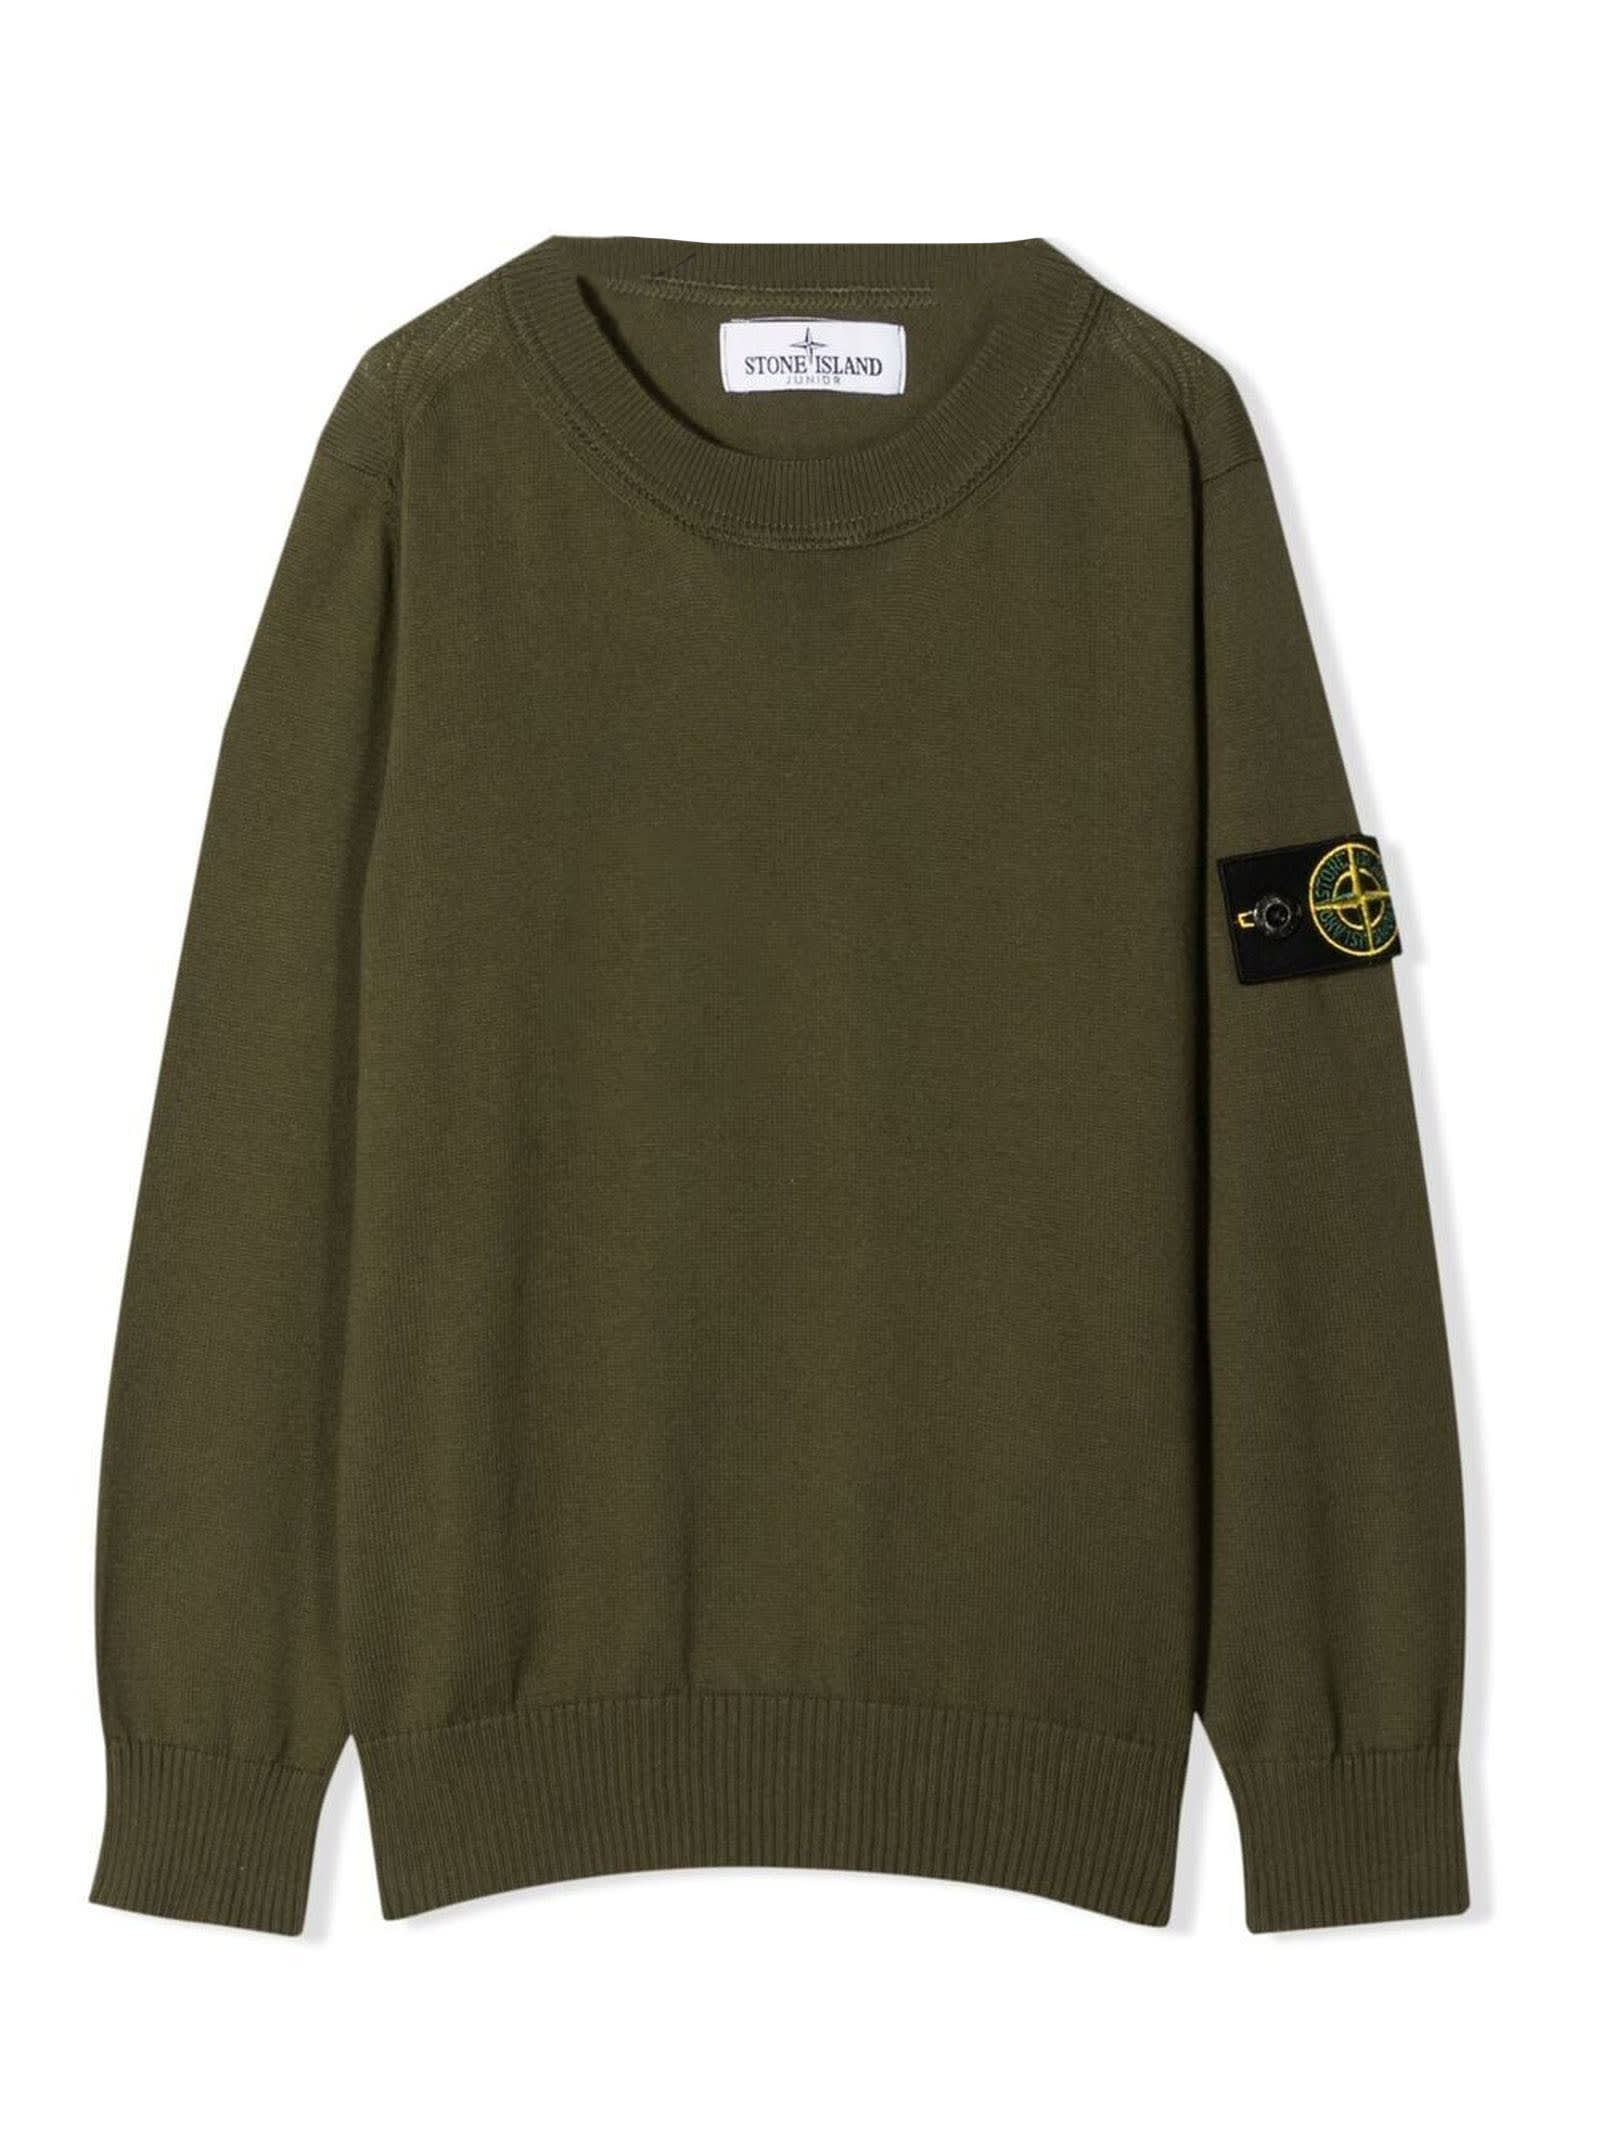 Stone Island Green Cotton Sweatshirt